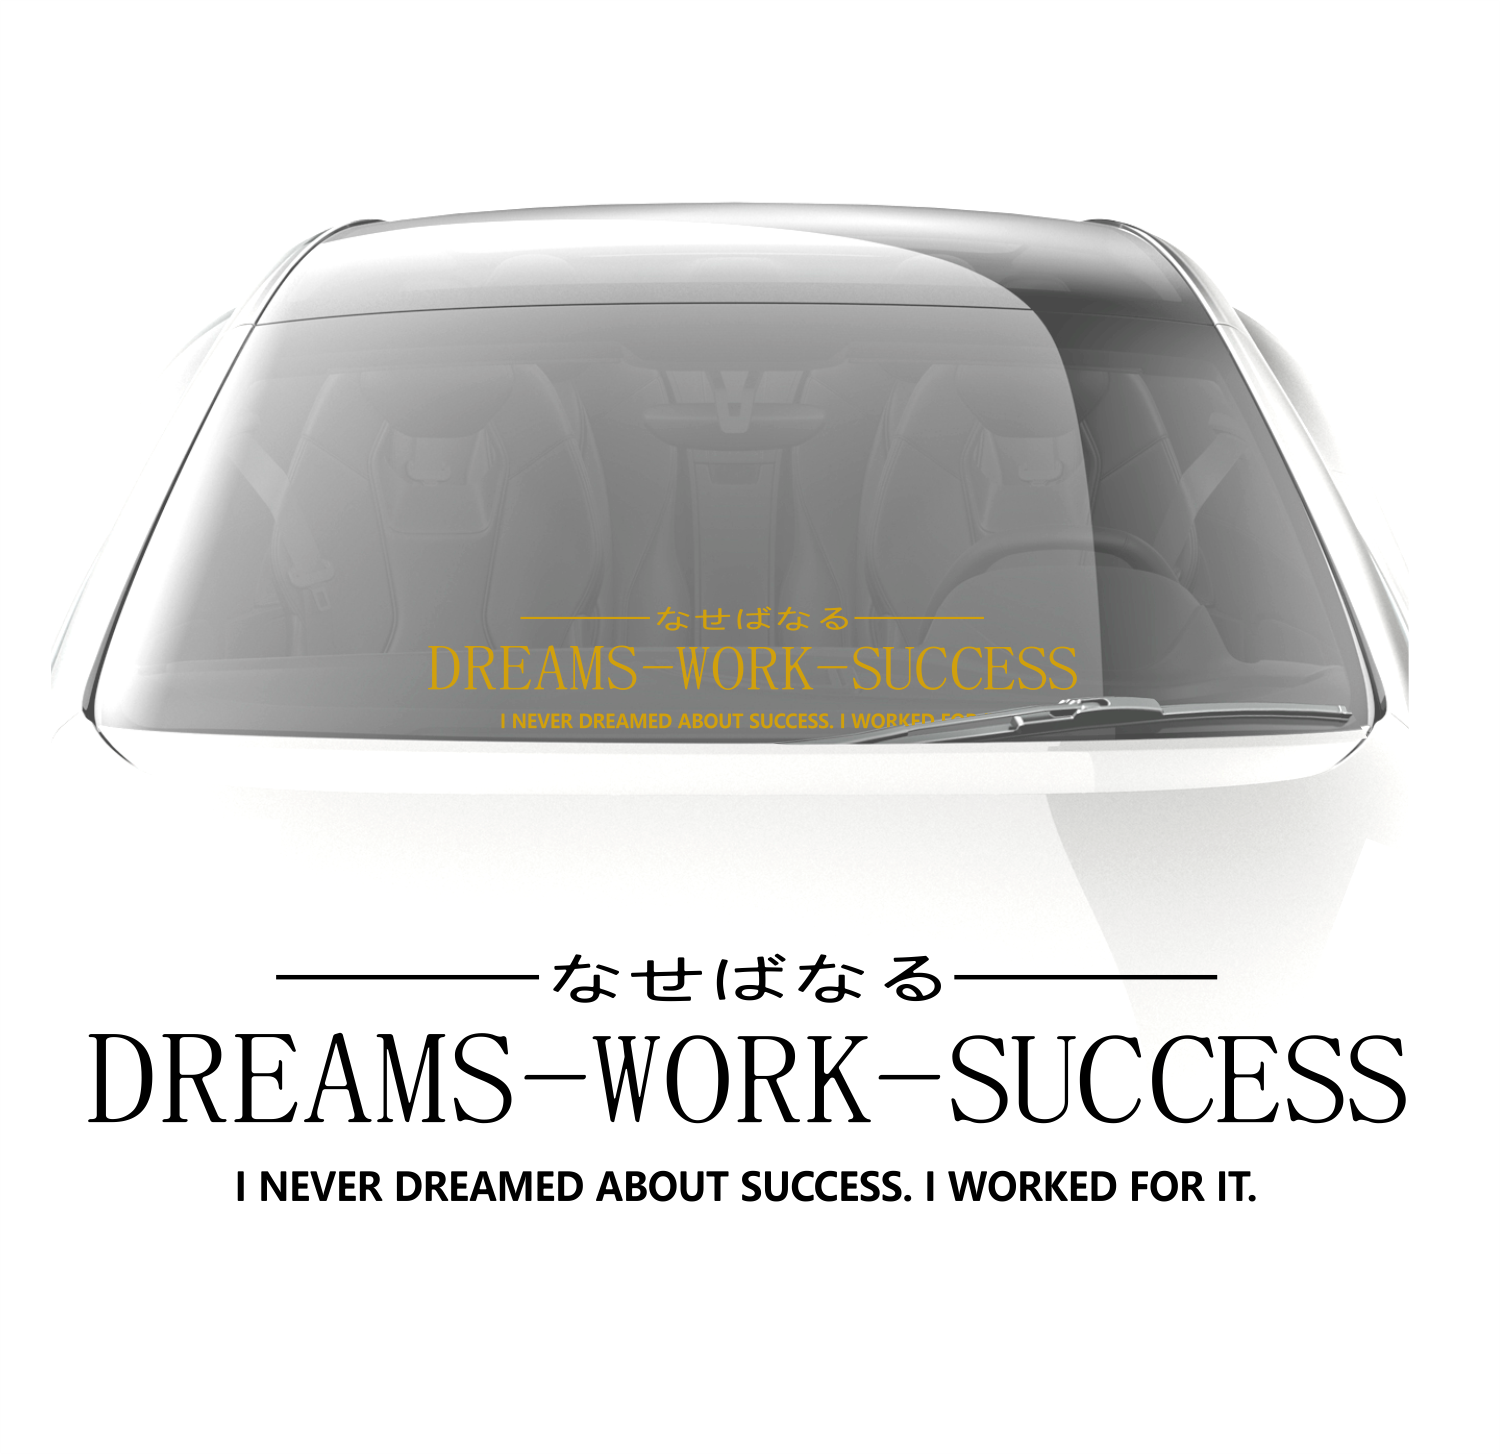 Dreams work success sticker decal - stickyart - 1